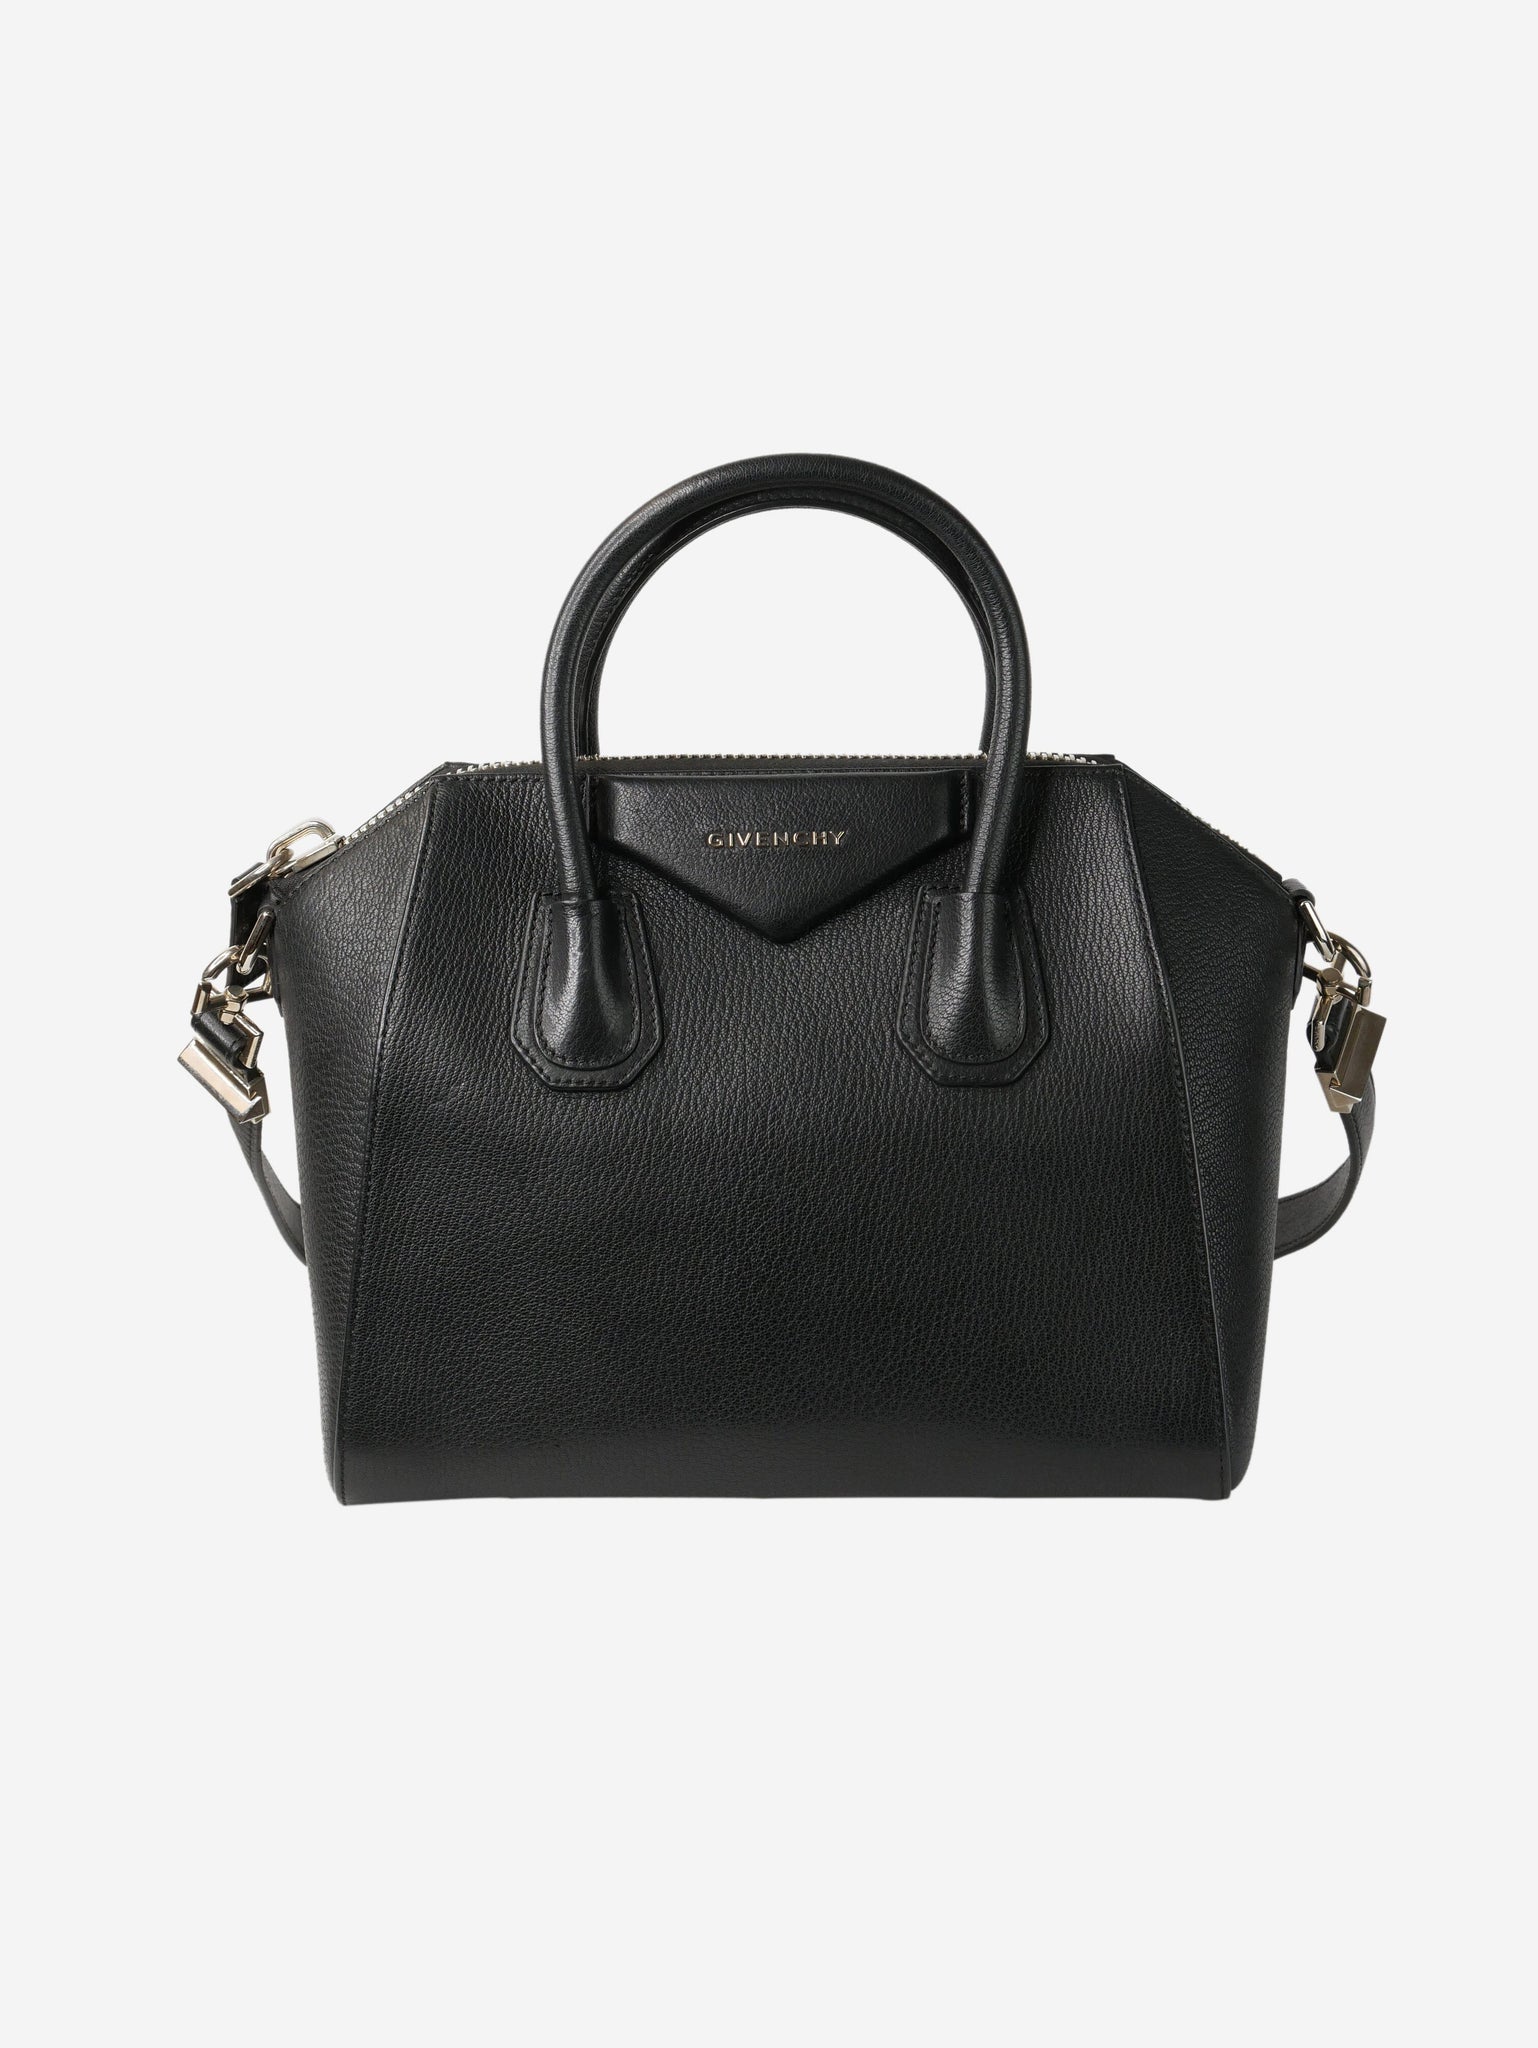 Black pre-owned Givenchy Antigona leather tote bag | SOTT